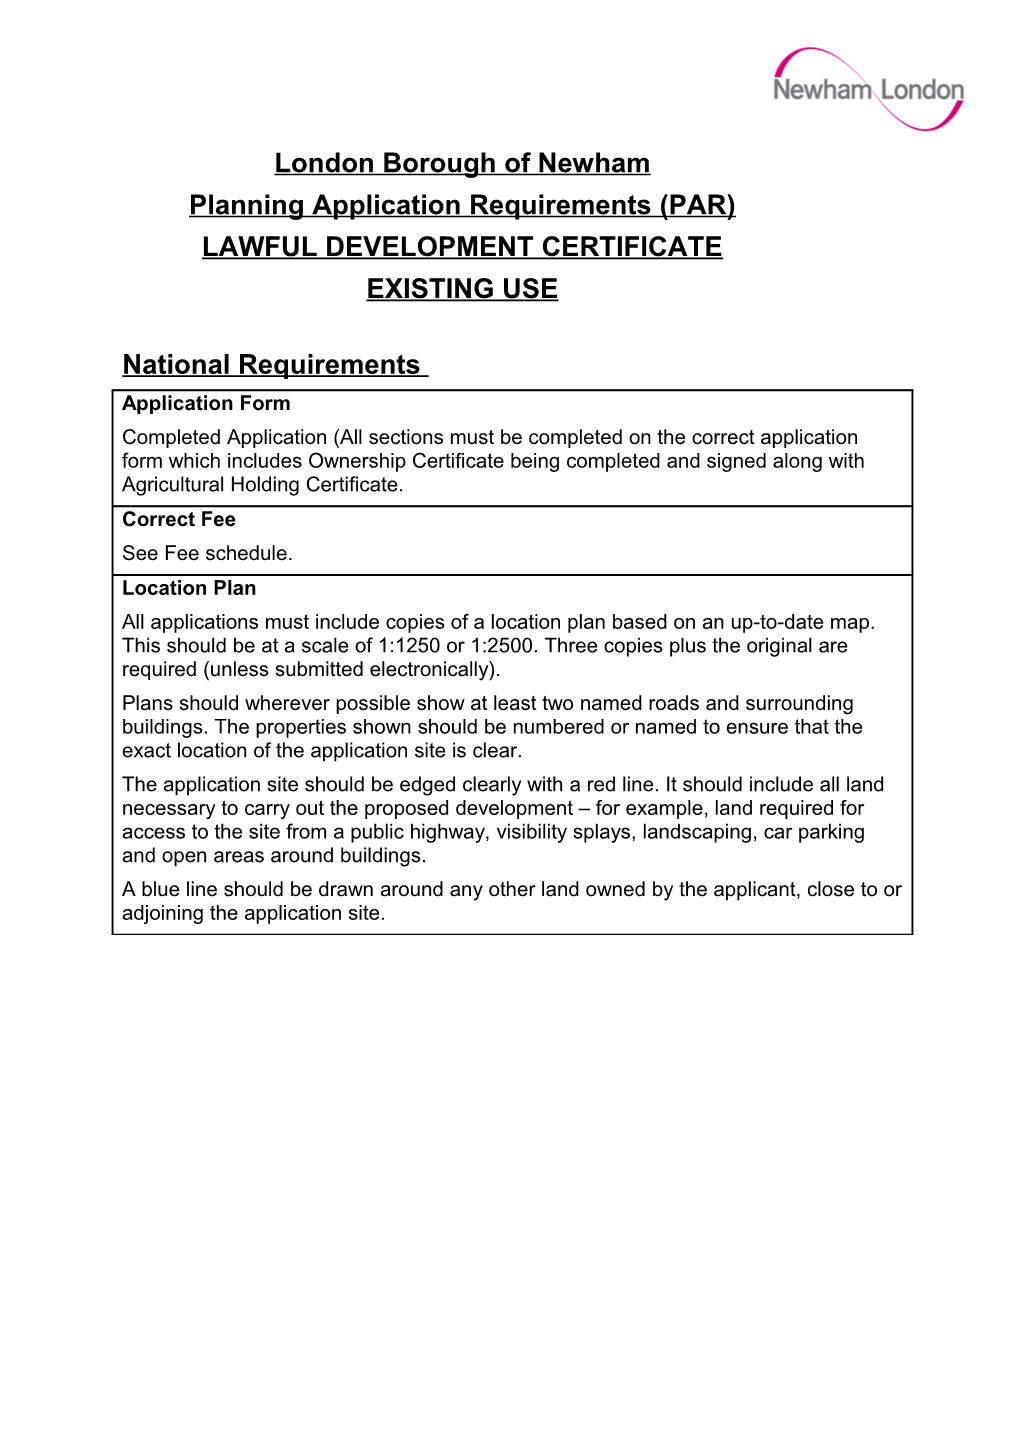 Lawful Development Certificate - Existing PAR